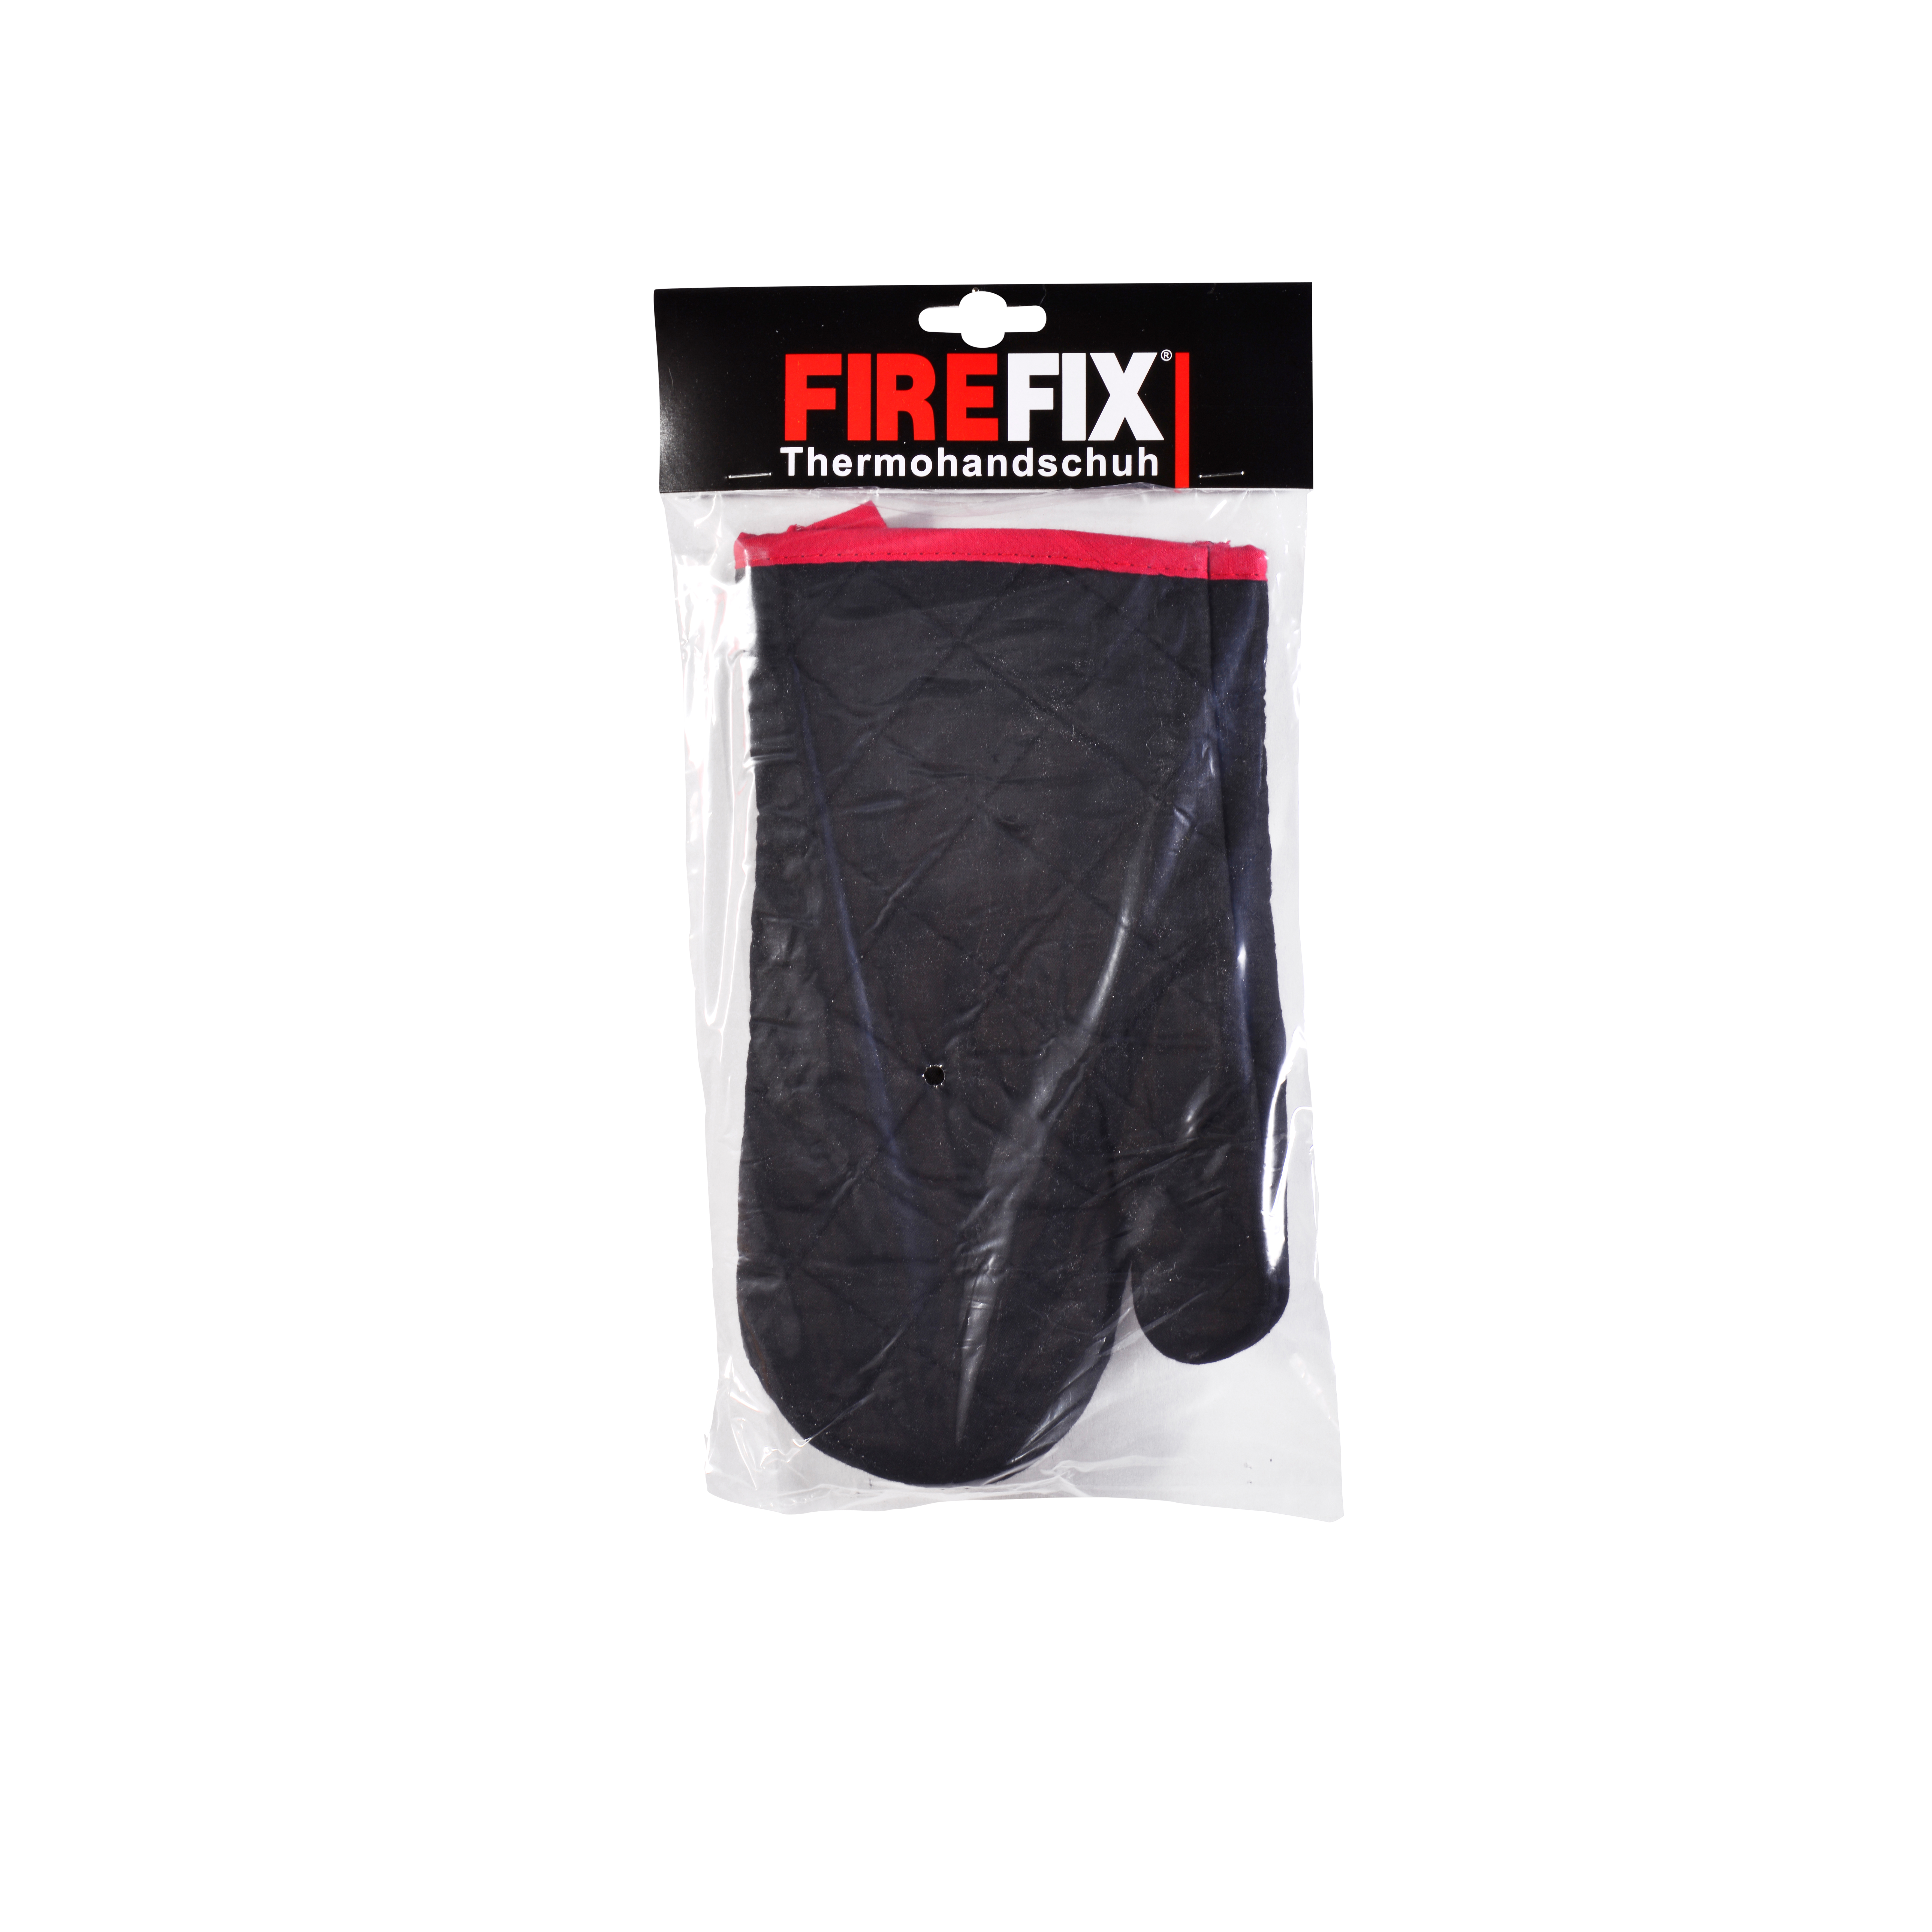 FIREFIX® Thermohandschuh 29 x 16 cm